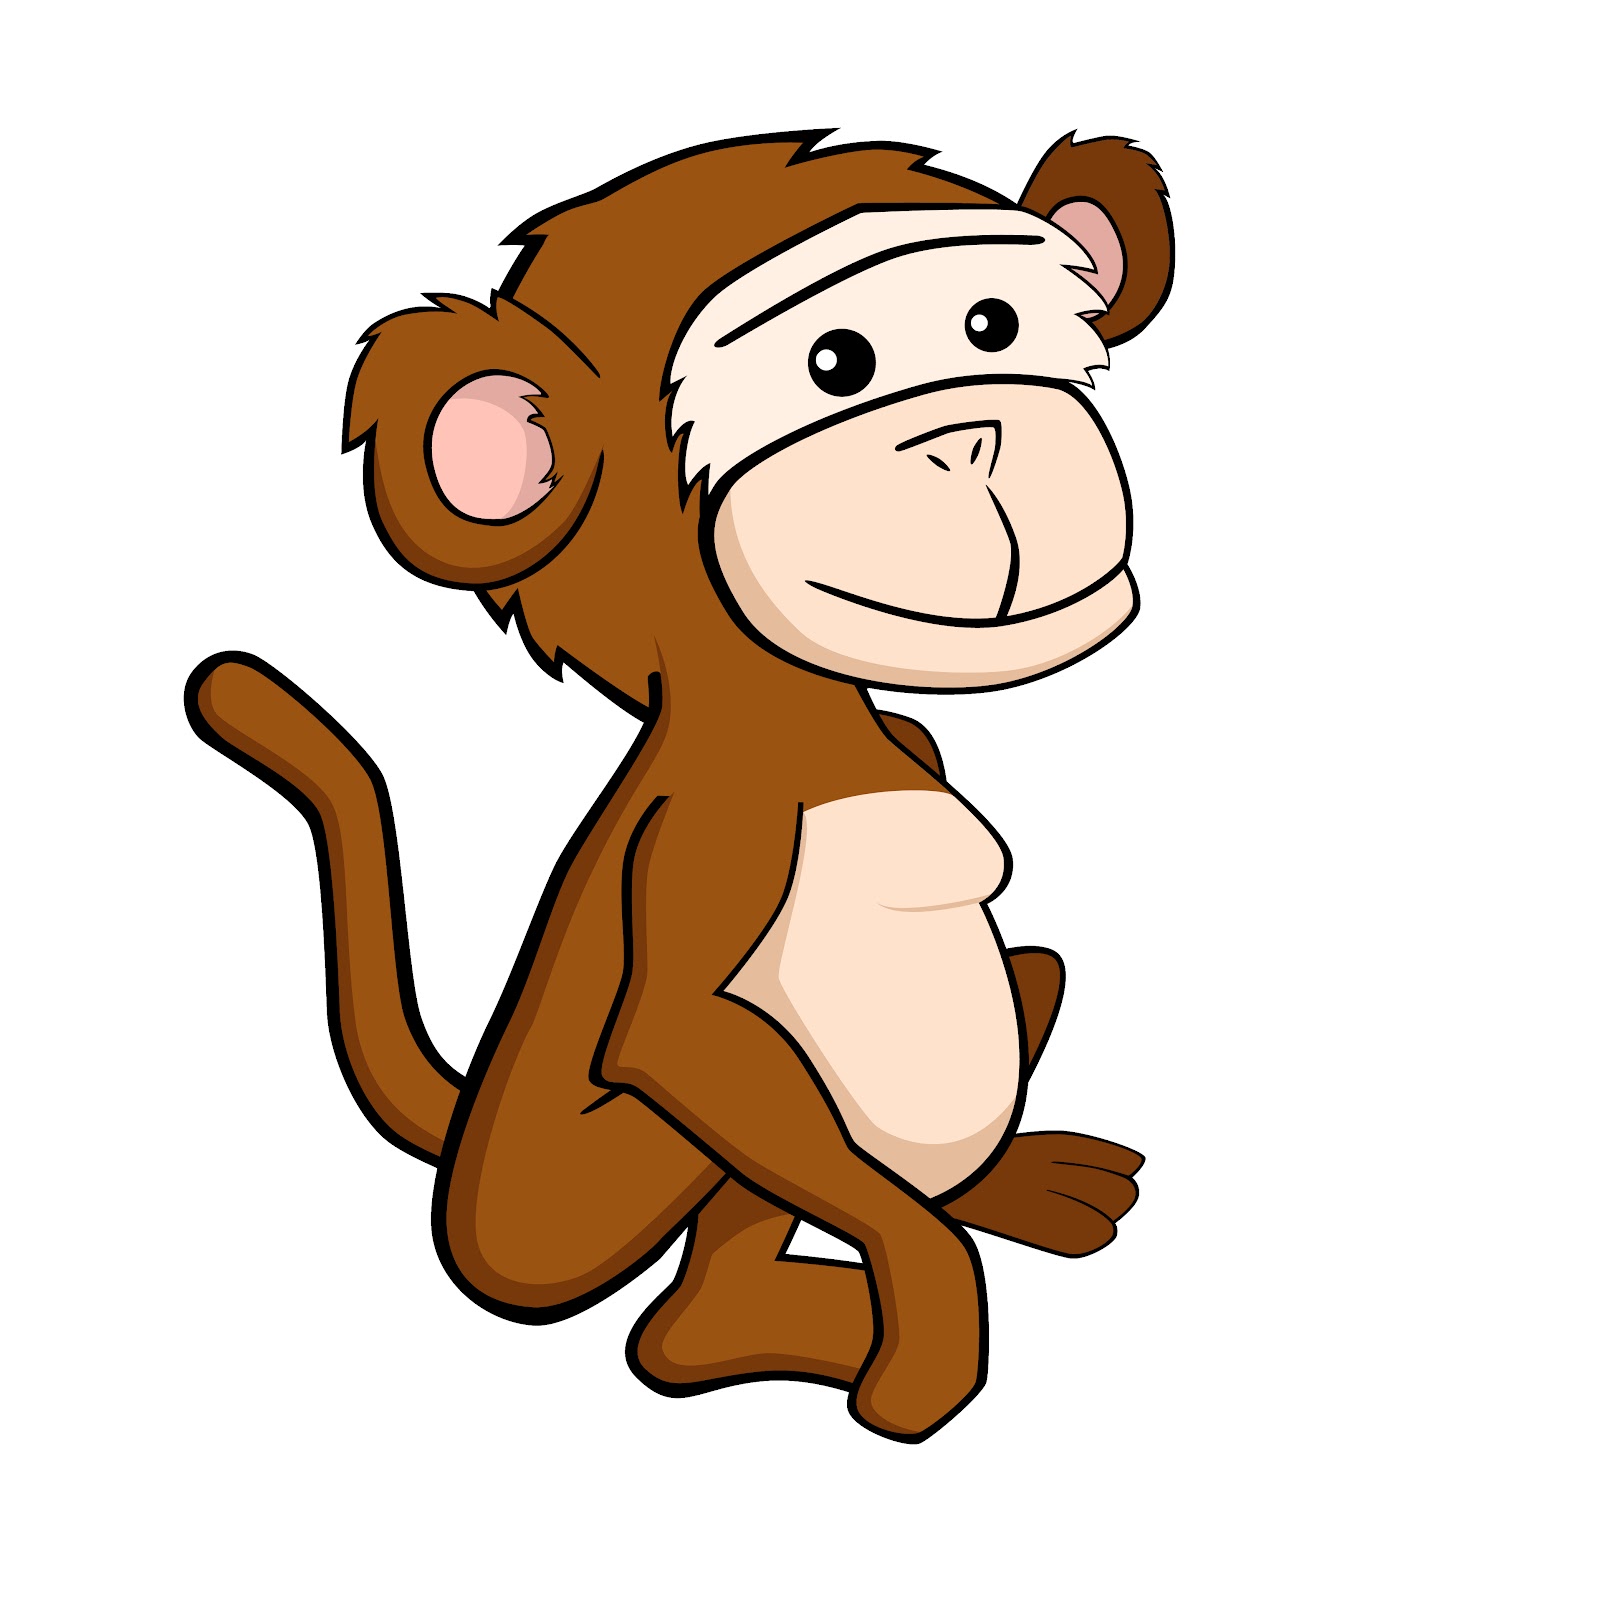 free vector monkey clip art - photo #14